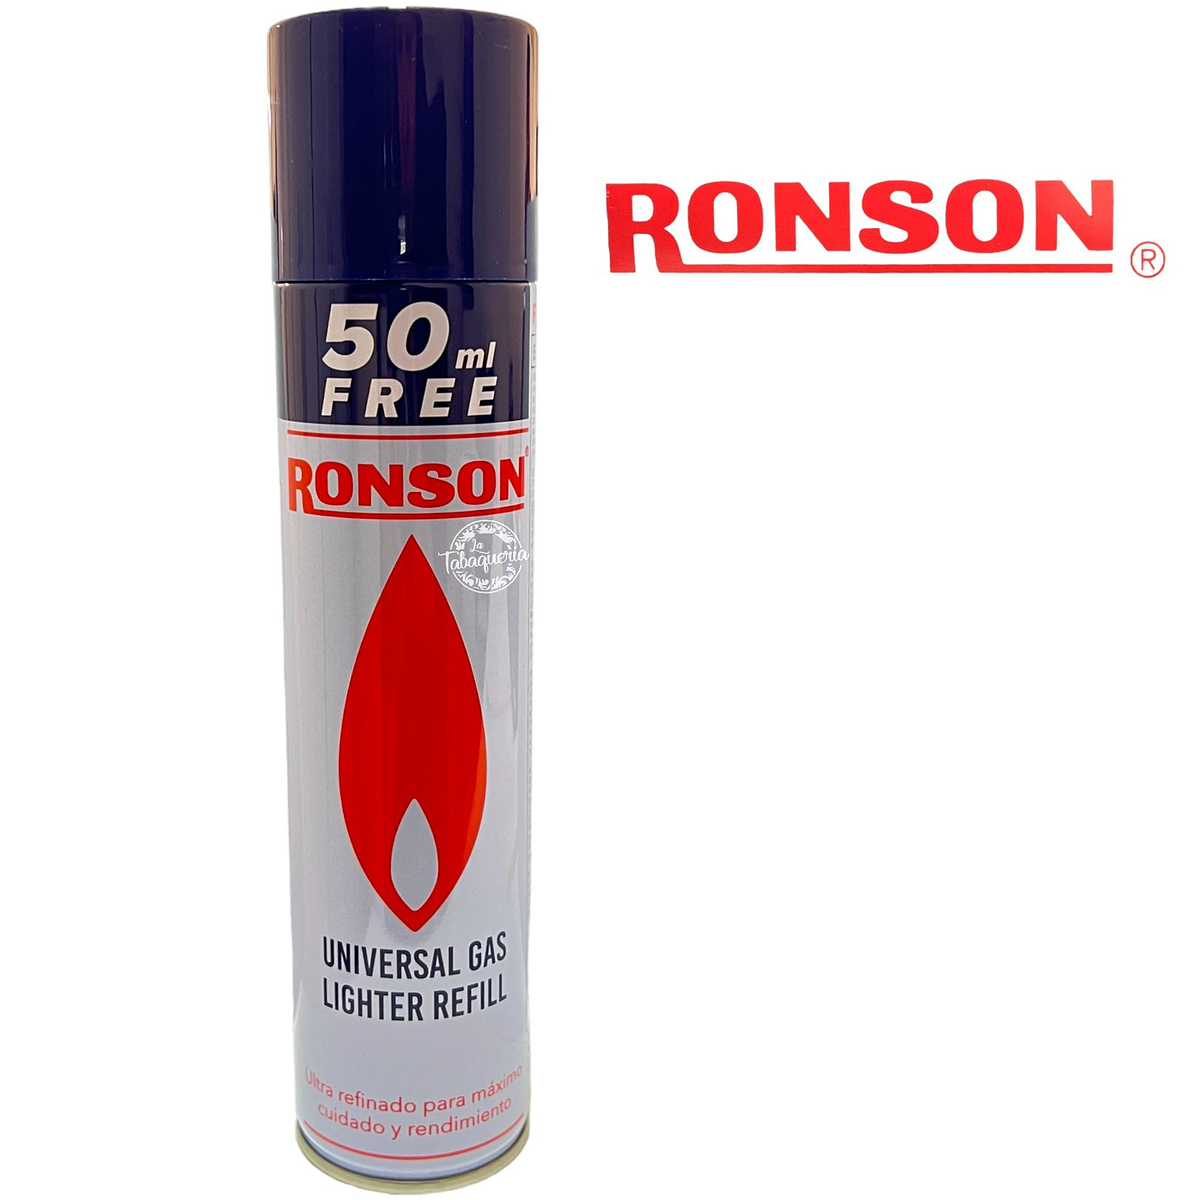 Gas Ronson Lighter Refill 300 ml. $1.490xMayor